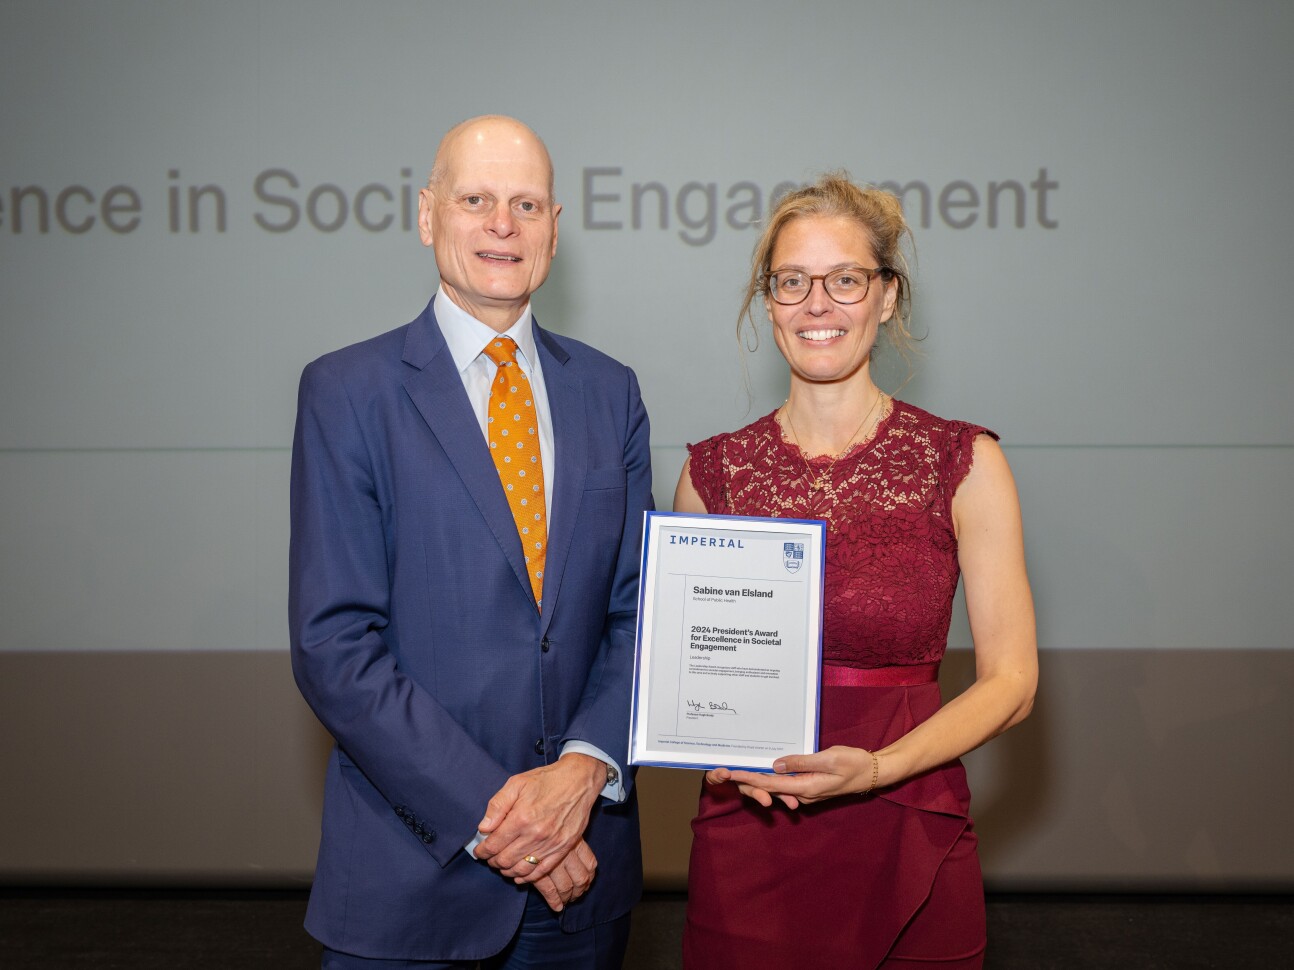 Sabine van Elsland accepting her certificate